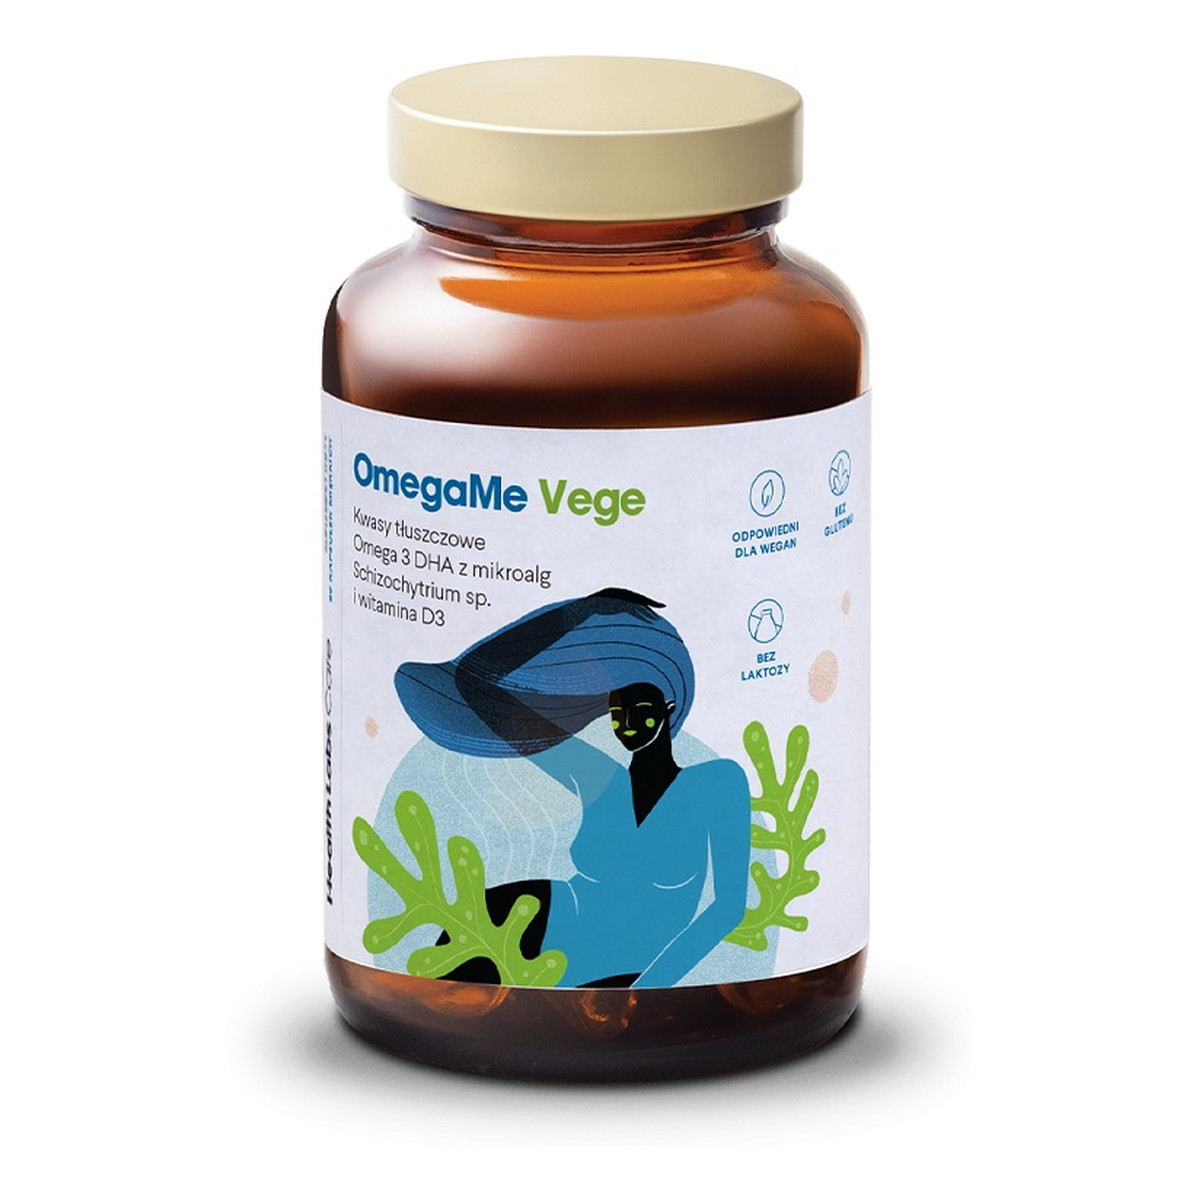 HealthLabs Omegame vege kwasy tłuszczowe omega 3 dha z alg morskich z witaminą d3 suplement diety 60 kapsułek